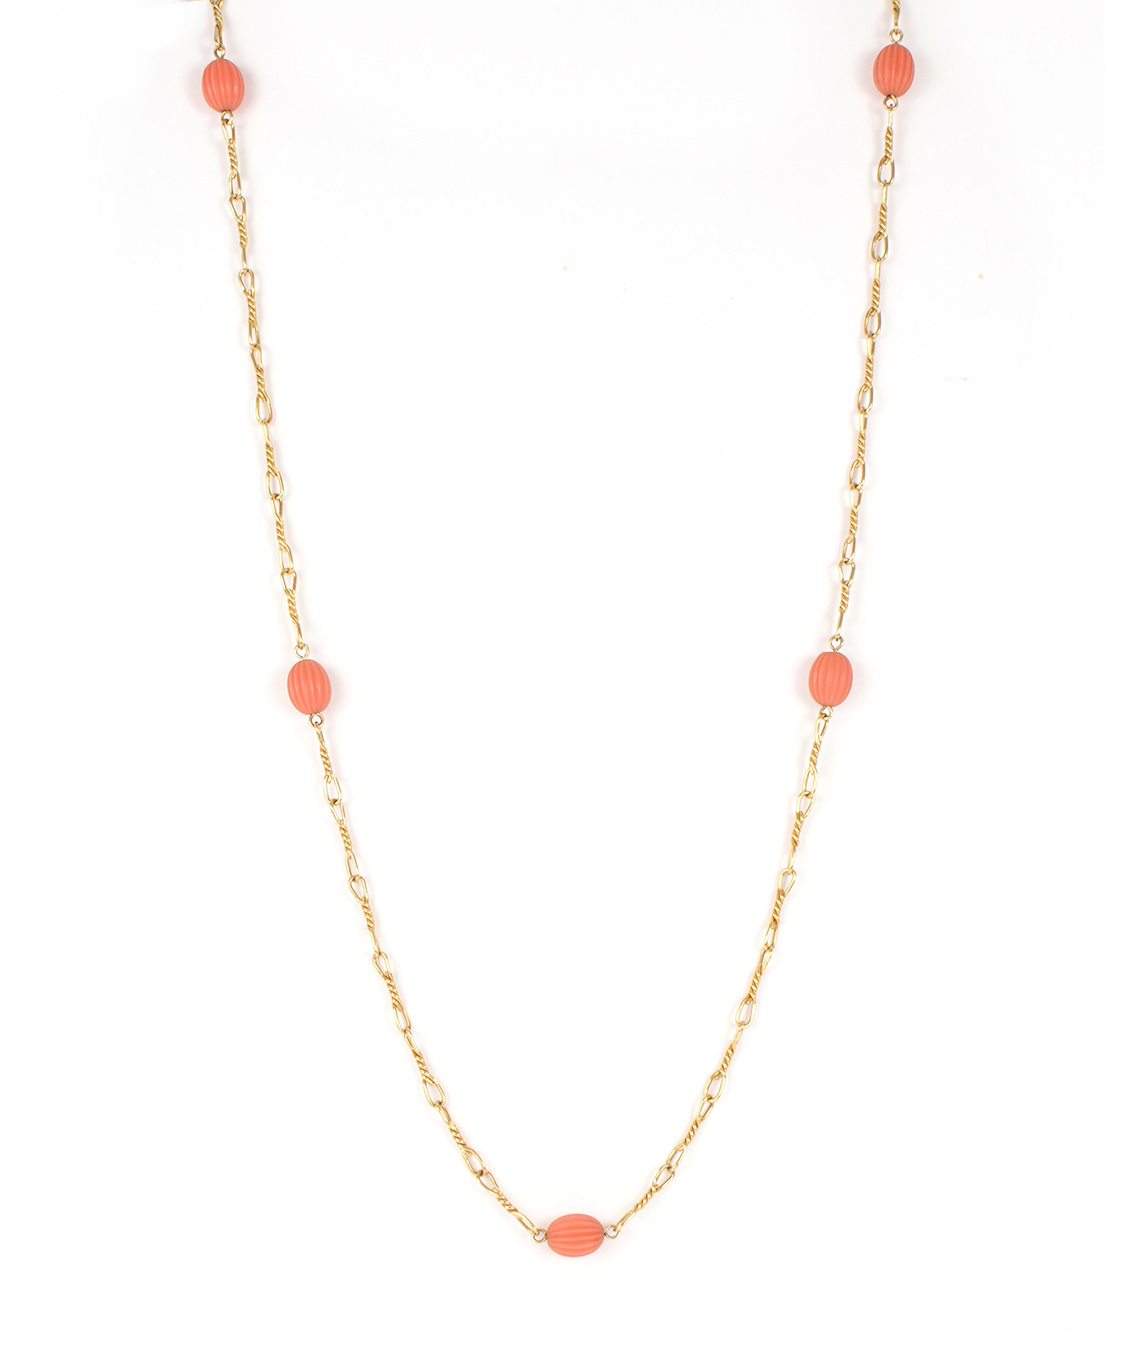 Dior Chain Necklace 1970s | Gadelles Vintage